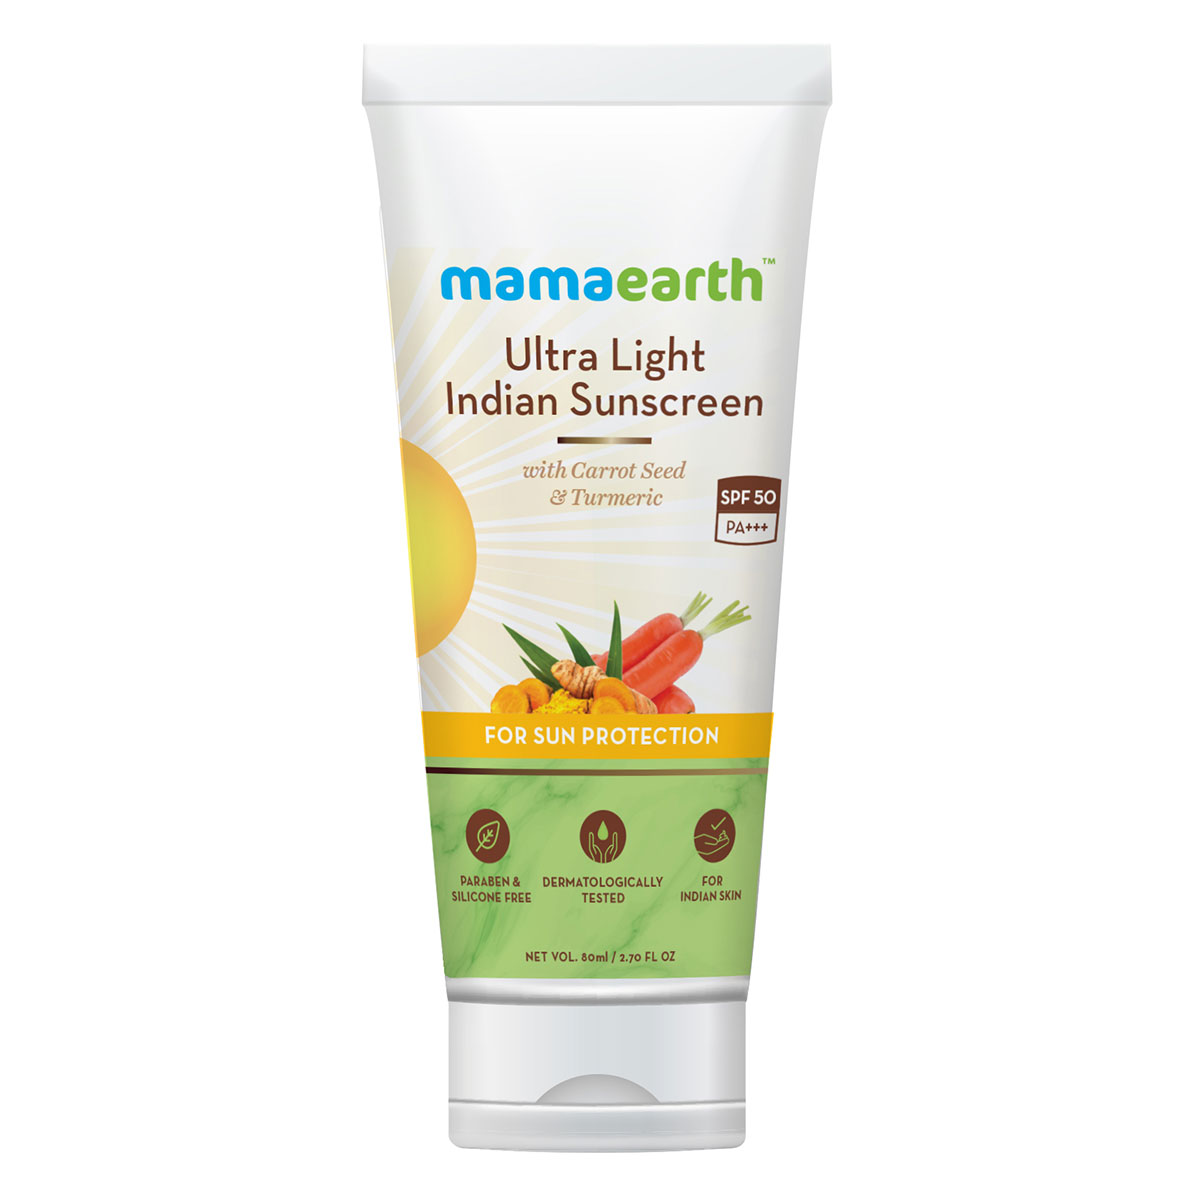 Sunscreen SPF 50, Mamaearth Ultra Light Indian Sunscreen for Sun Protection  - 80 ml